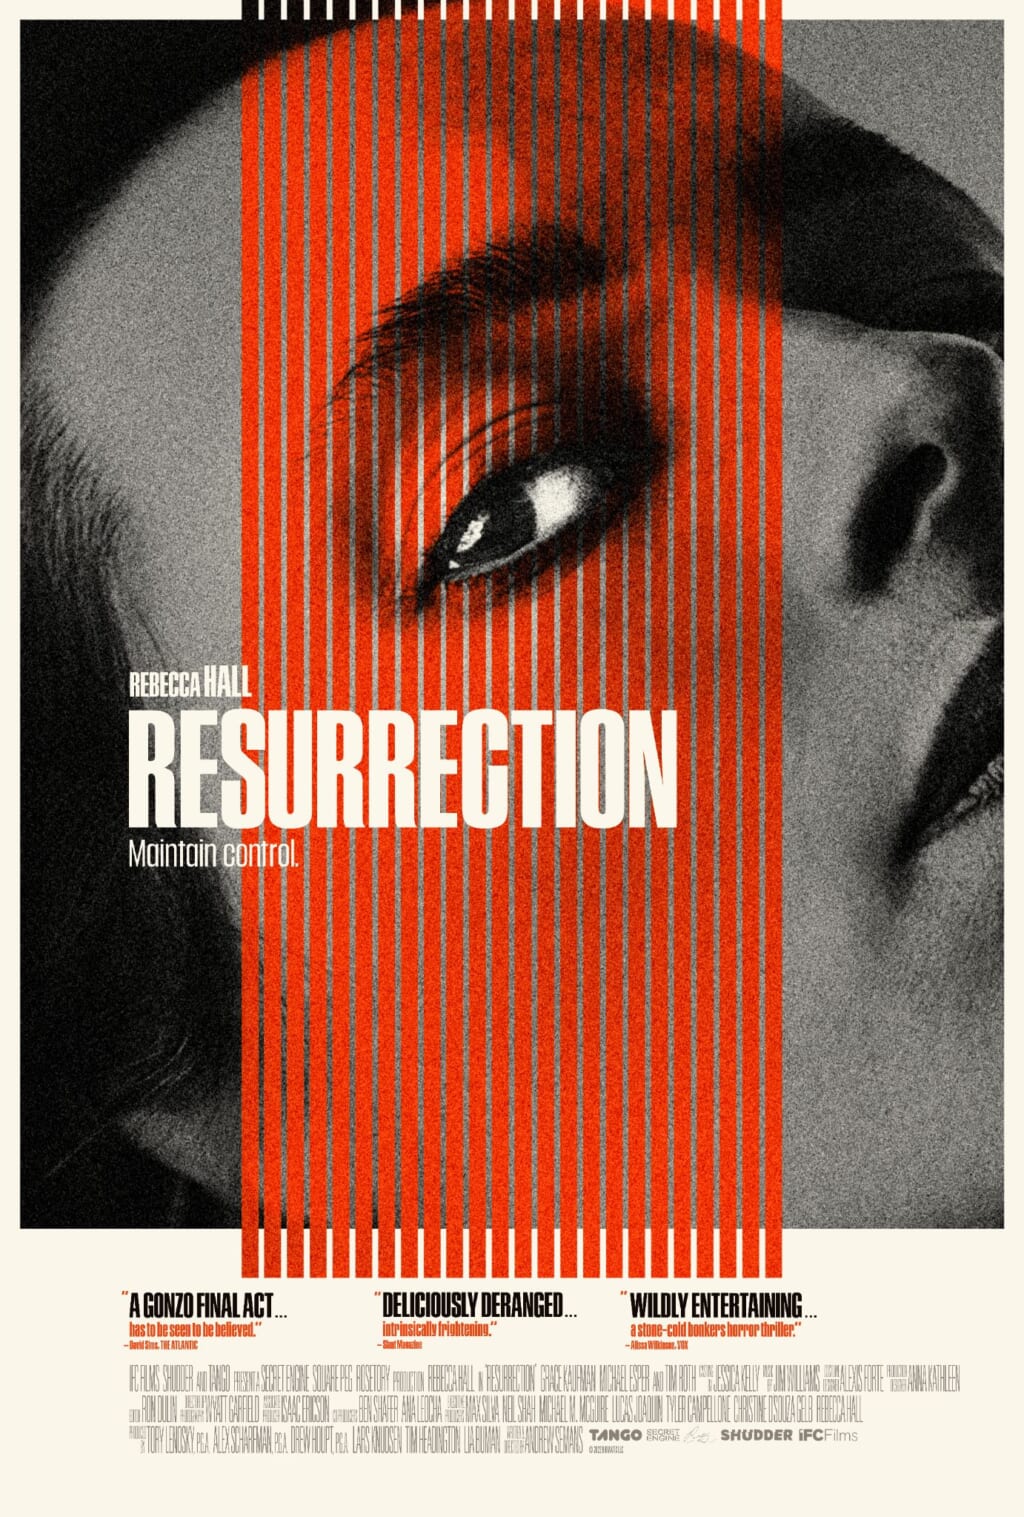 RESOS 91 27x40 M2.1V1.0 1024x1517 - Rebecca Hall Runs From A Disturbing Past in Chilling 'Resurrection' Trailer [Watch]